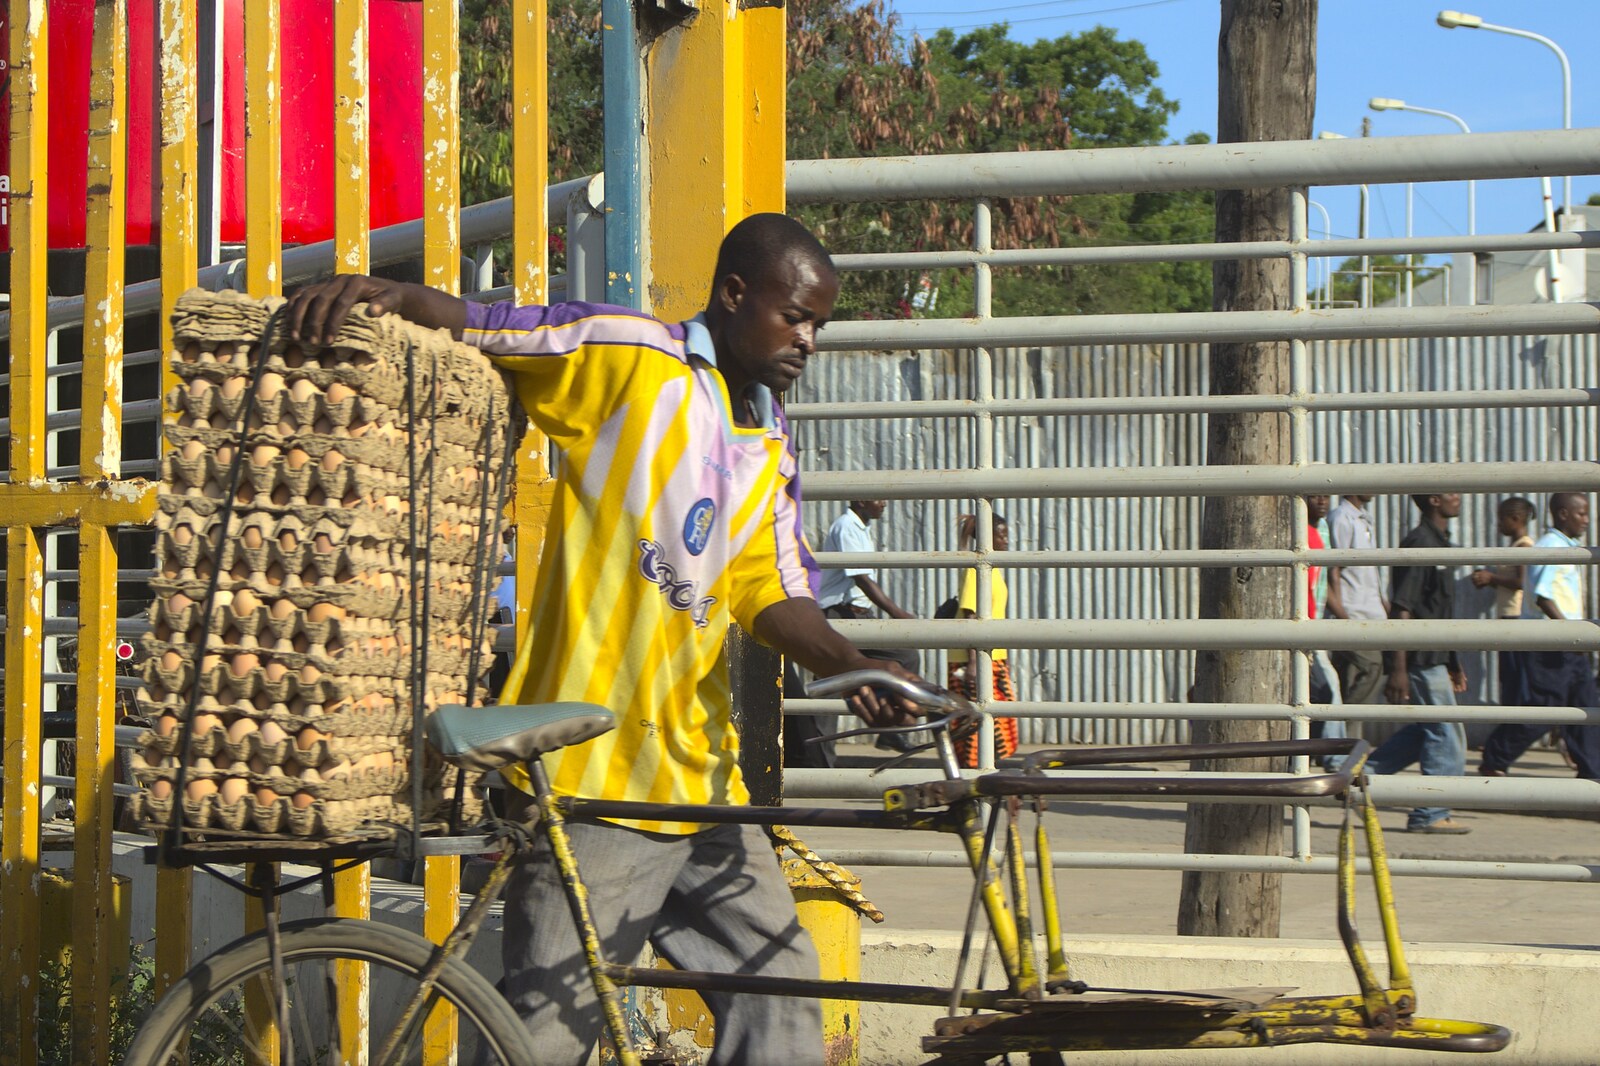 Long Train (not) Runnin': Tiwi Beach, Mombasa, Kenya - 7th November 2010: A dude with a large stack of eggs on his bike